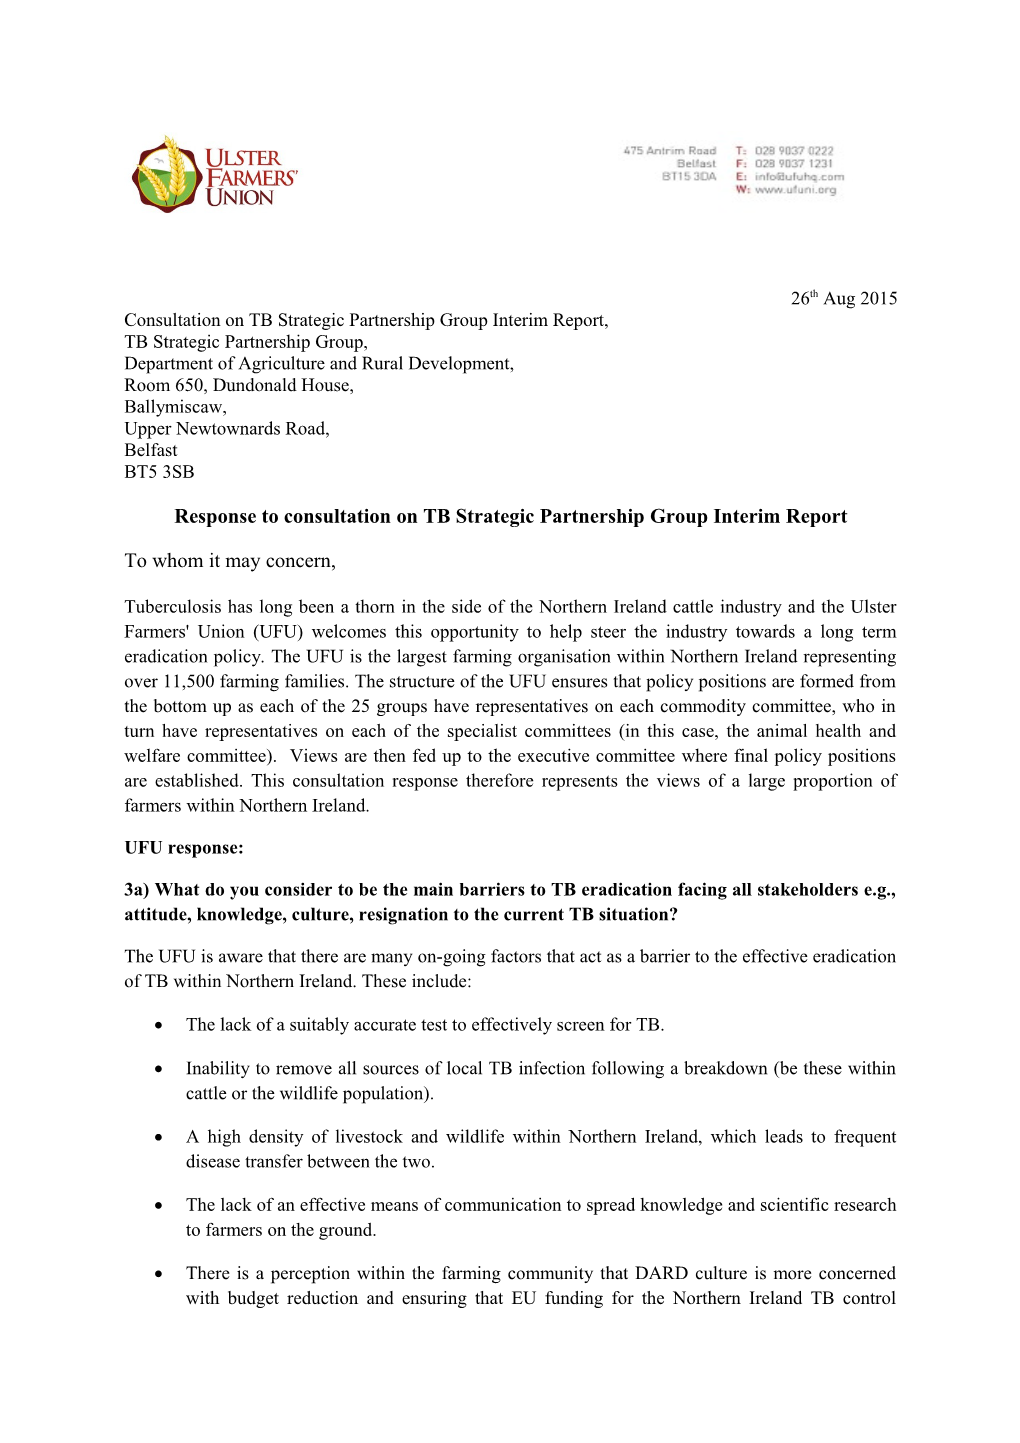 Consultation on TB Strategic Partnership Group Interim Report